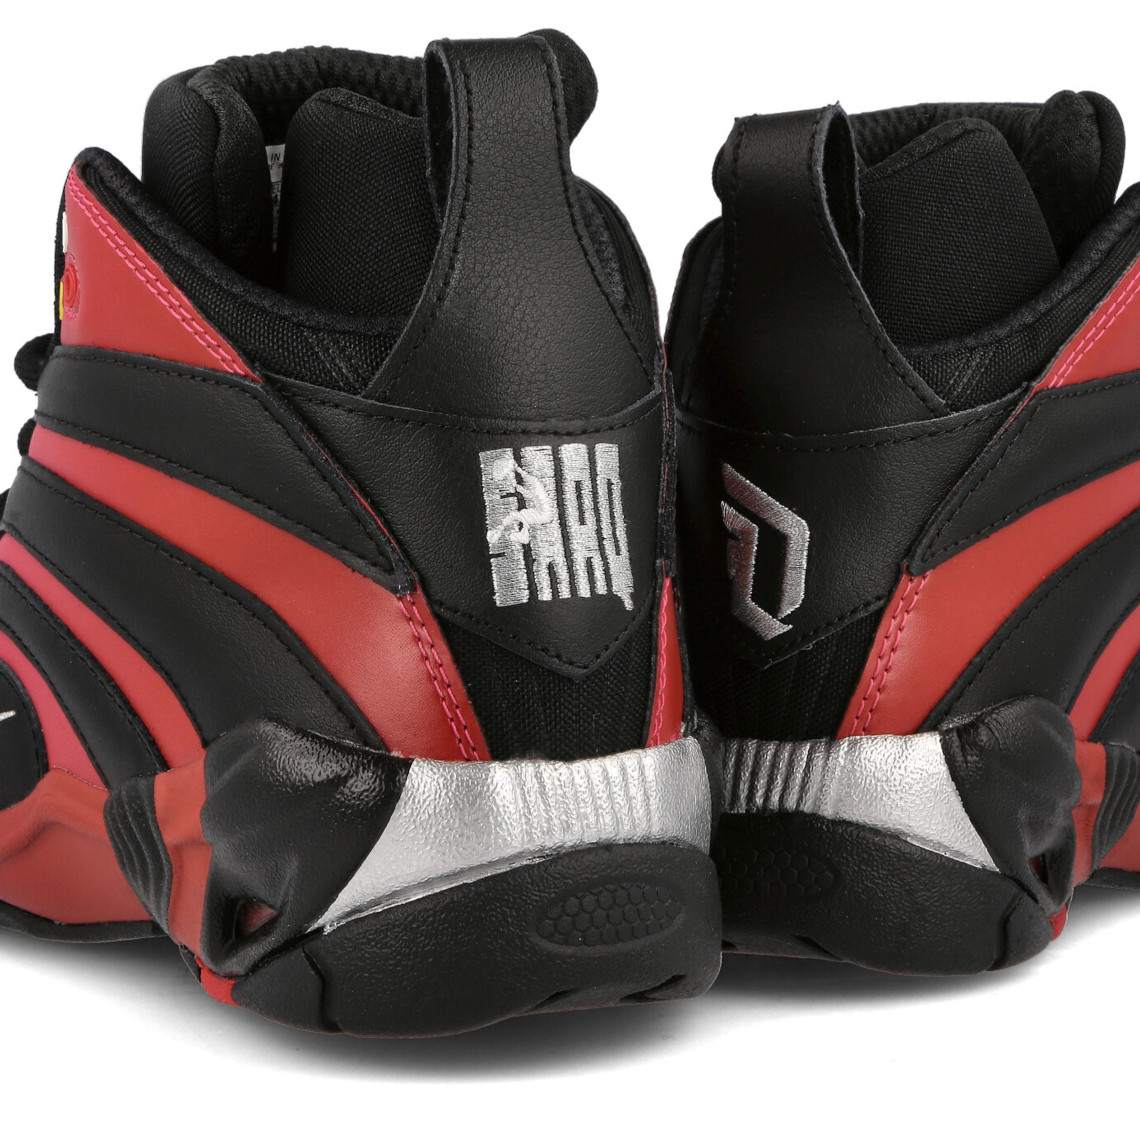 Reebok Shaqnosis Damian Lillard Semi Pink GX2609 | SneakerNews.com